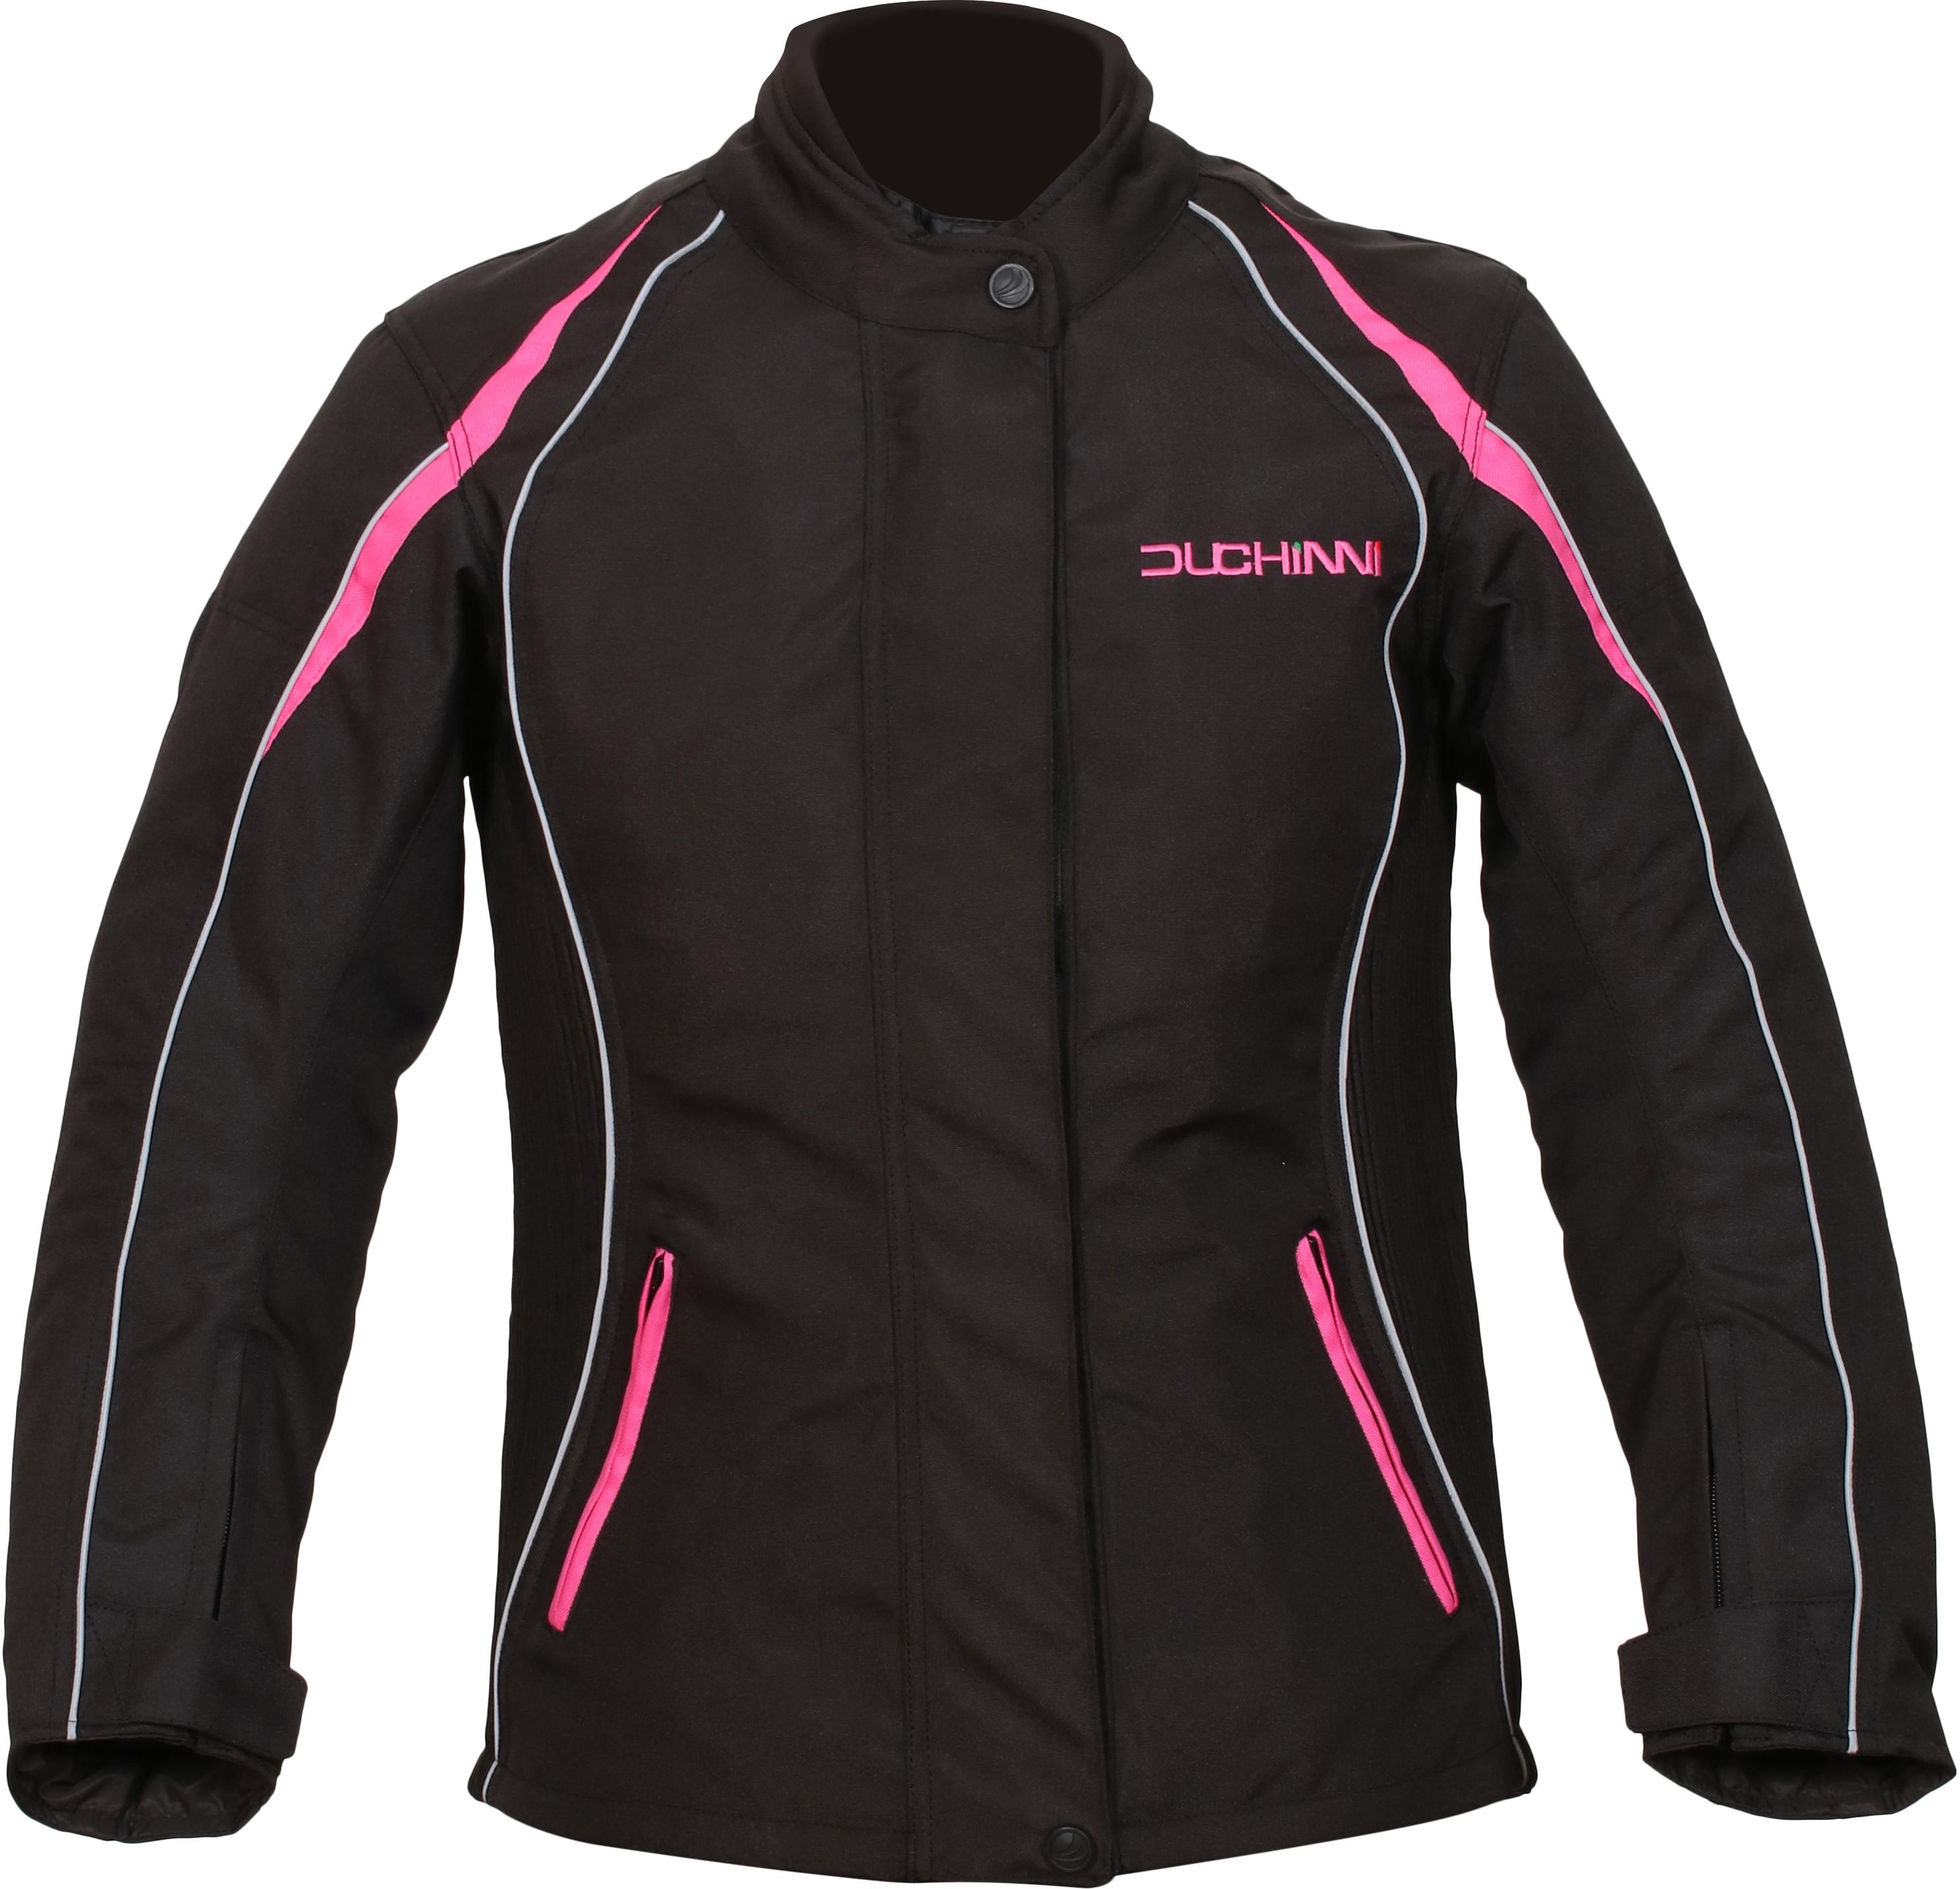 Duchinni Vienna Ladies Motorcycle Jacket - Black And Pink, 12